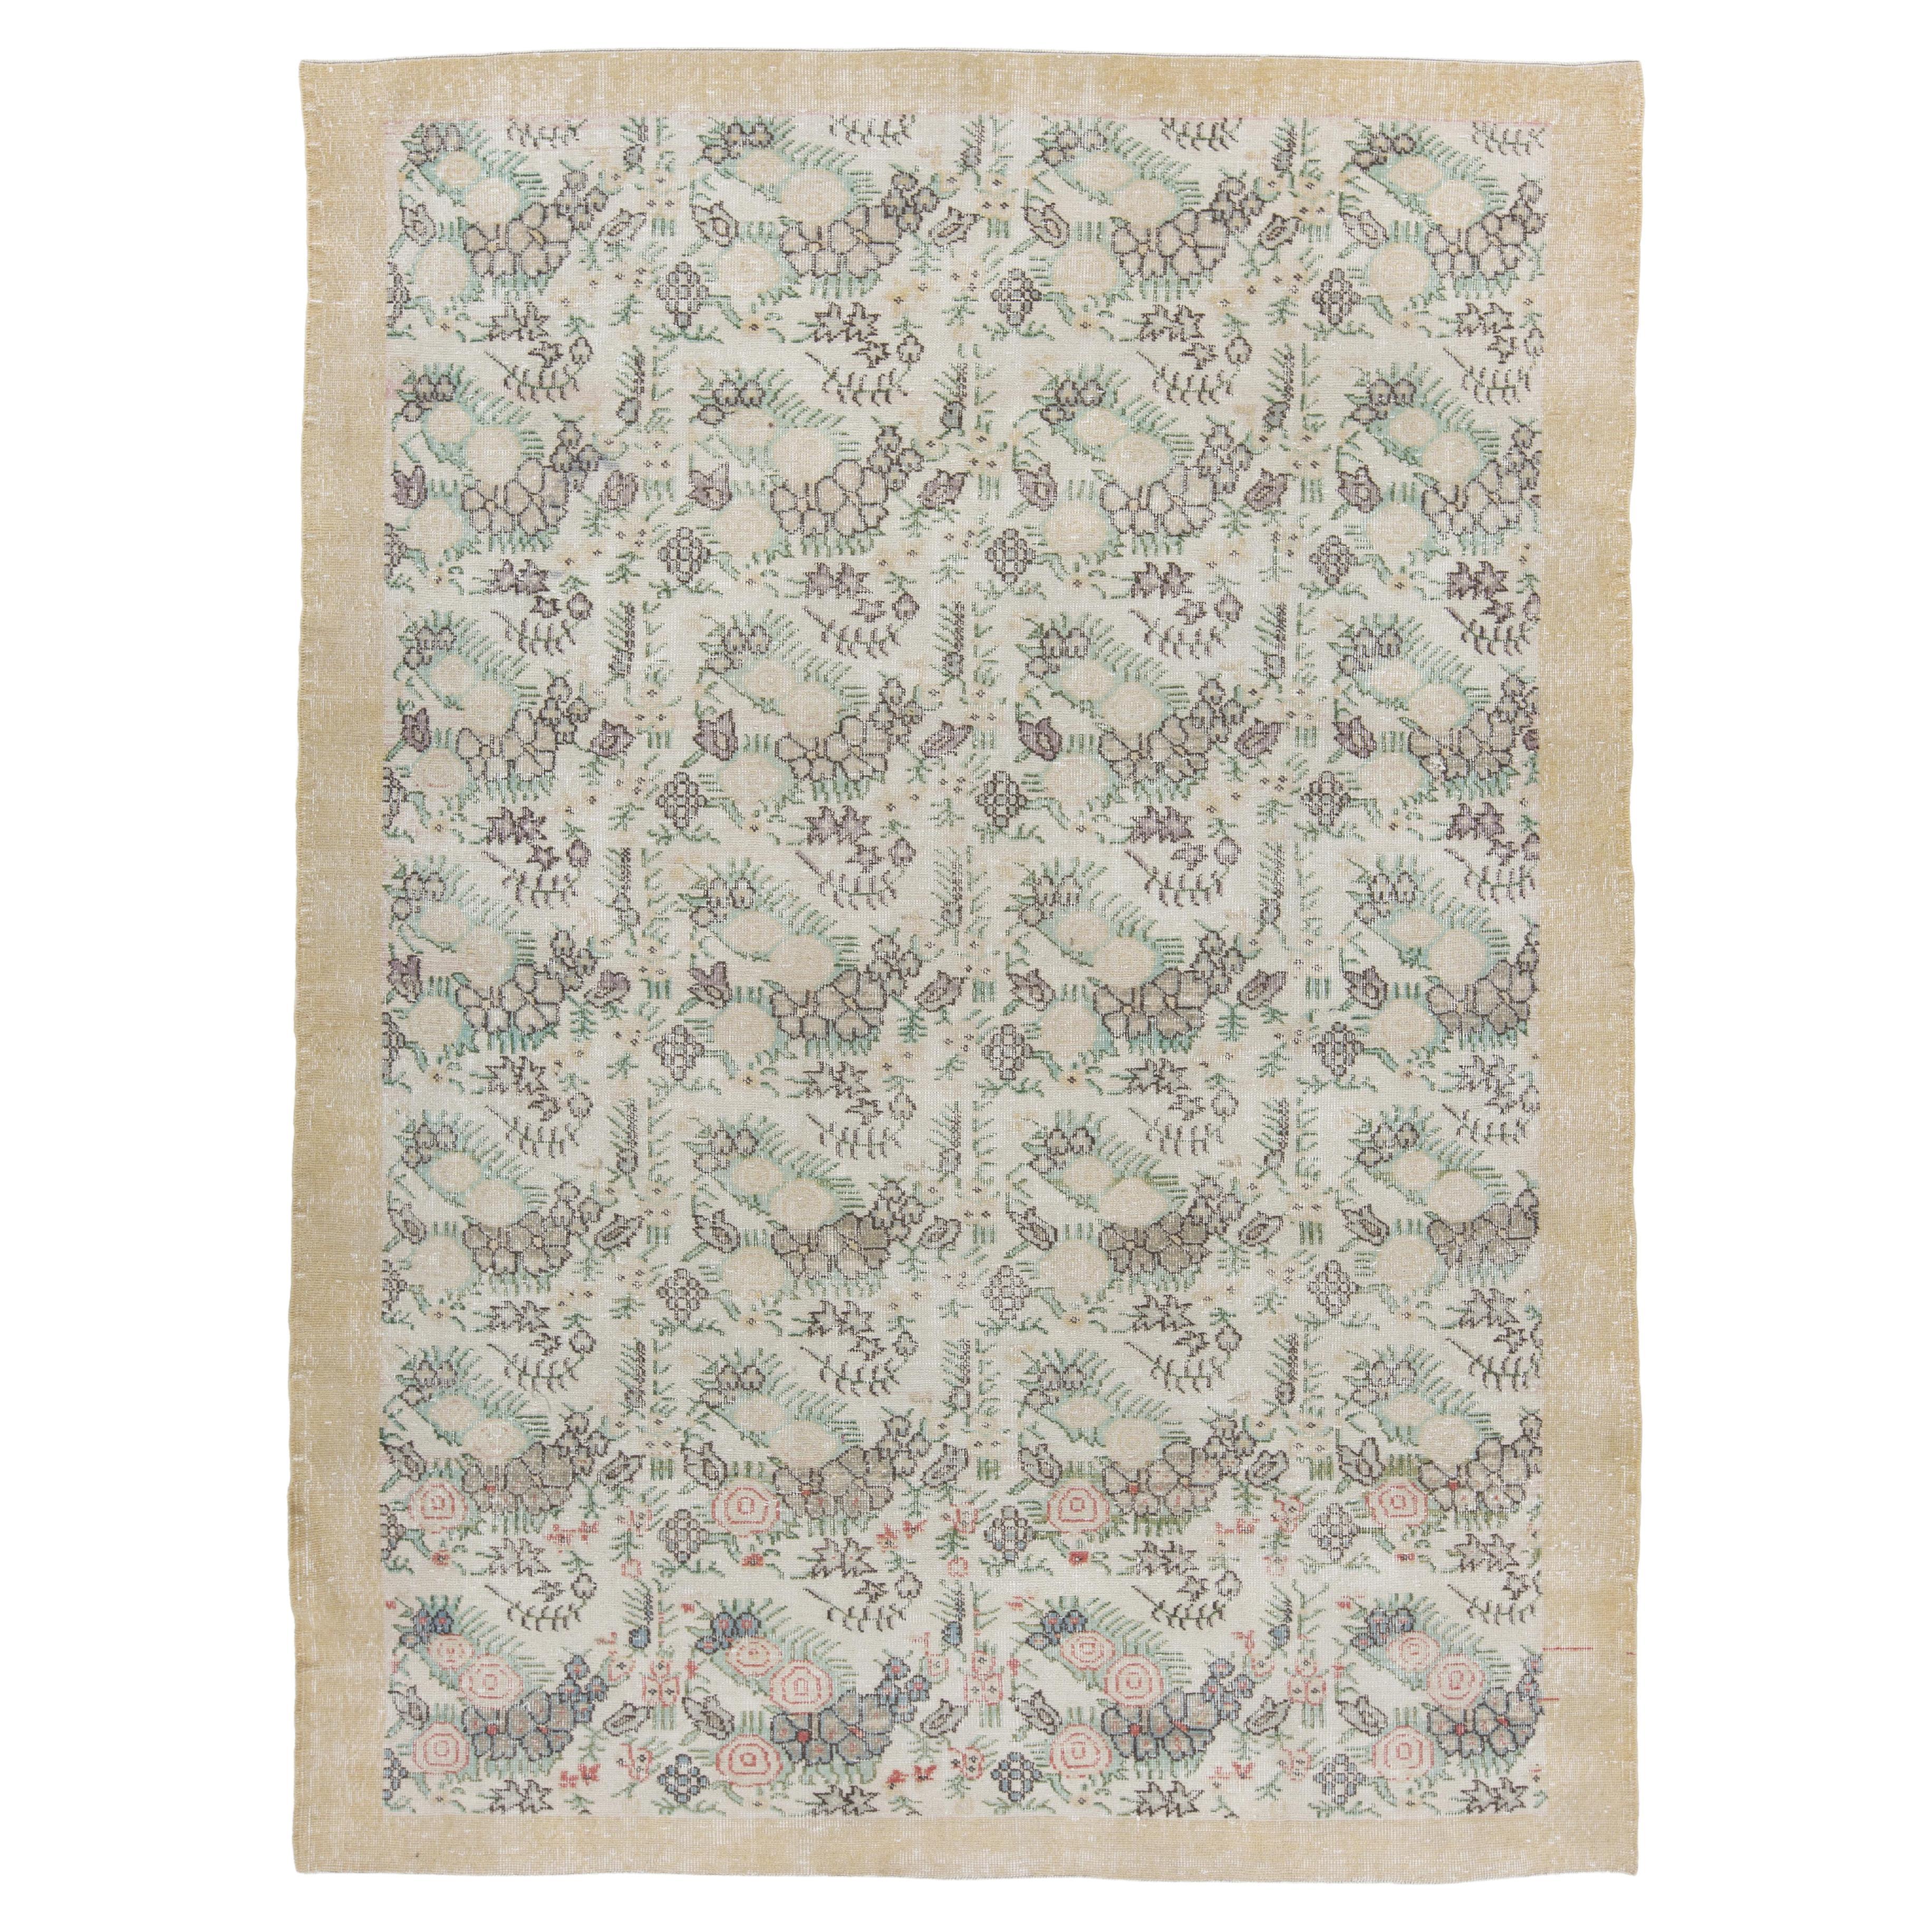 7.3x10.2 Ft Vintage Anatolian Rug with Floral Design, Large Handmade Carpet